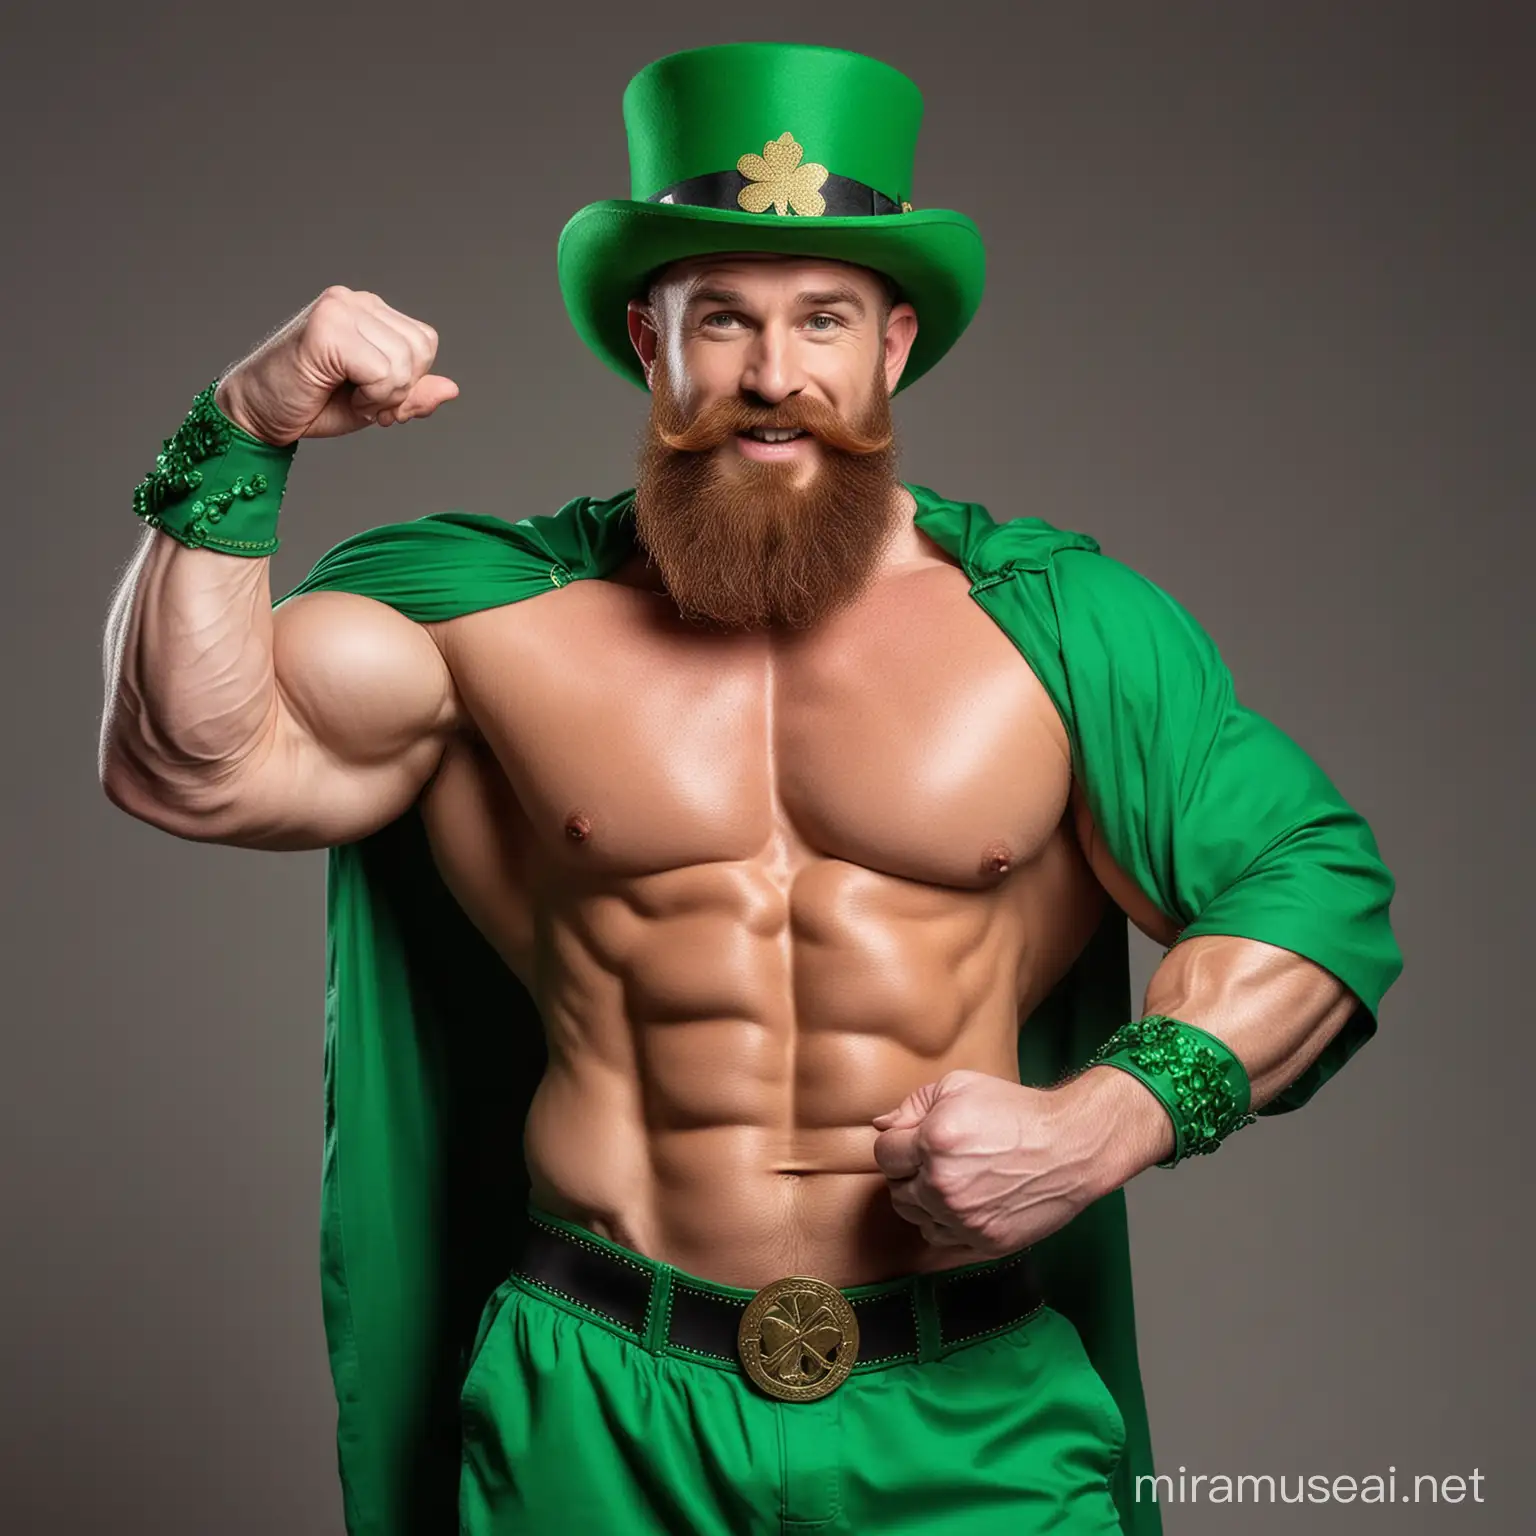 Muscular IFBB Bodybuilder as Leprechaun in Green Irish Attire with Shamrocks